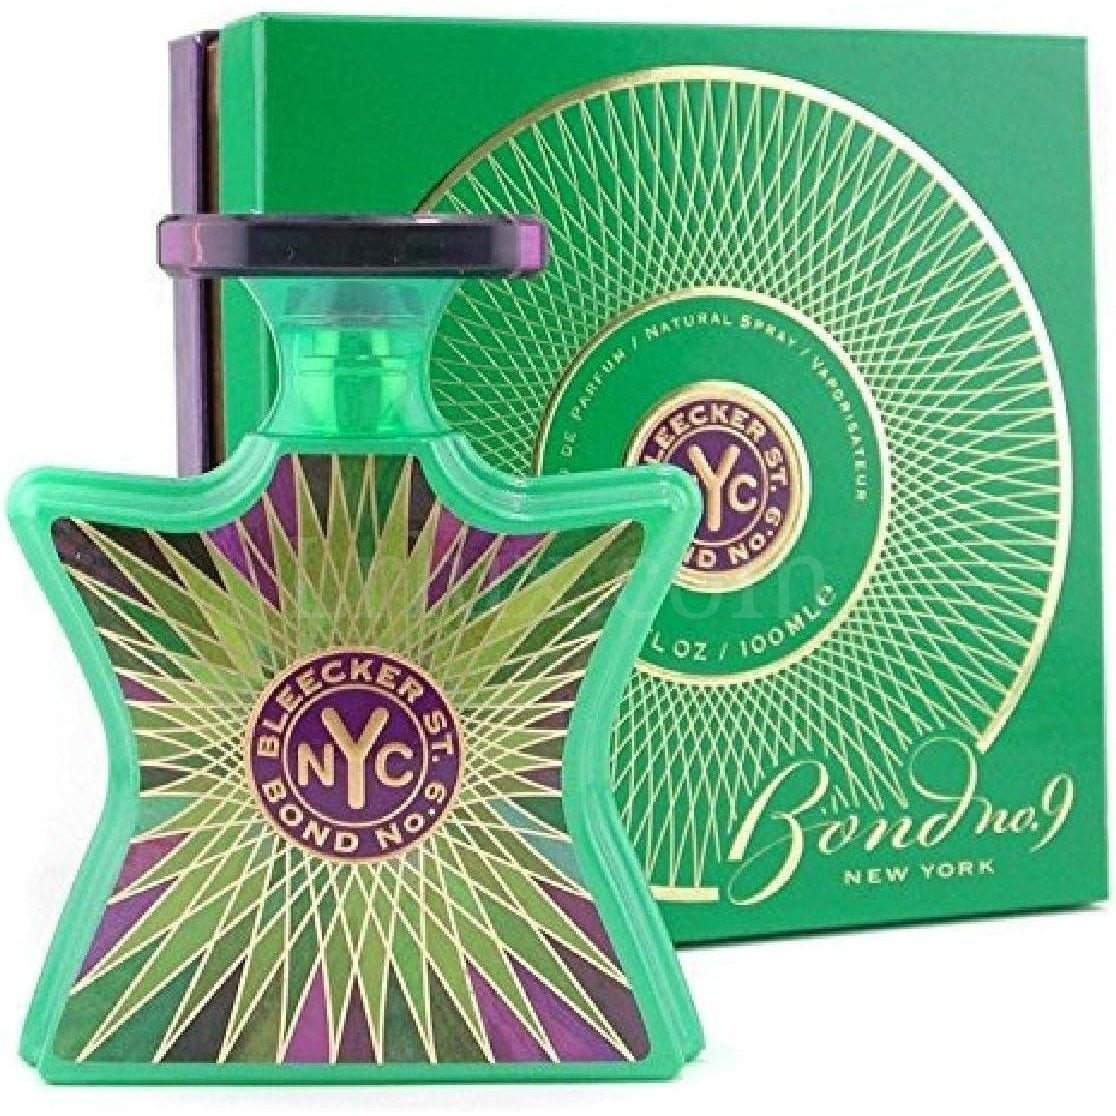 Bleecker Street Unisex Eau de Perfume, 3.4oz / 100 ml by Bond 9 - Lrlux.com